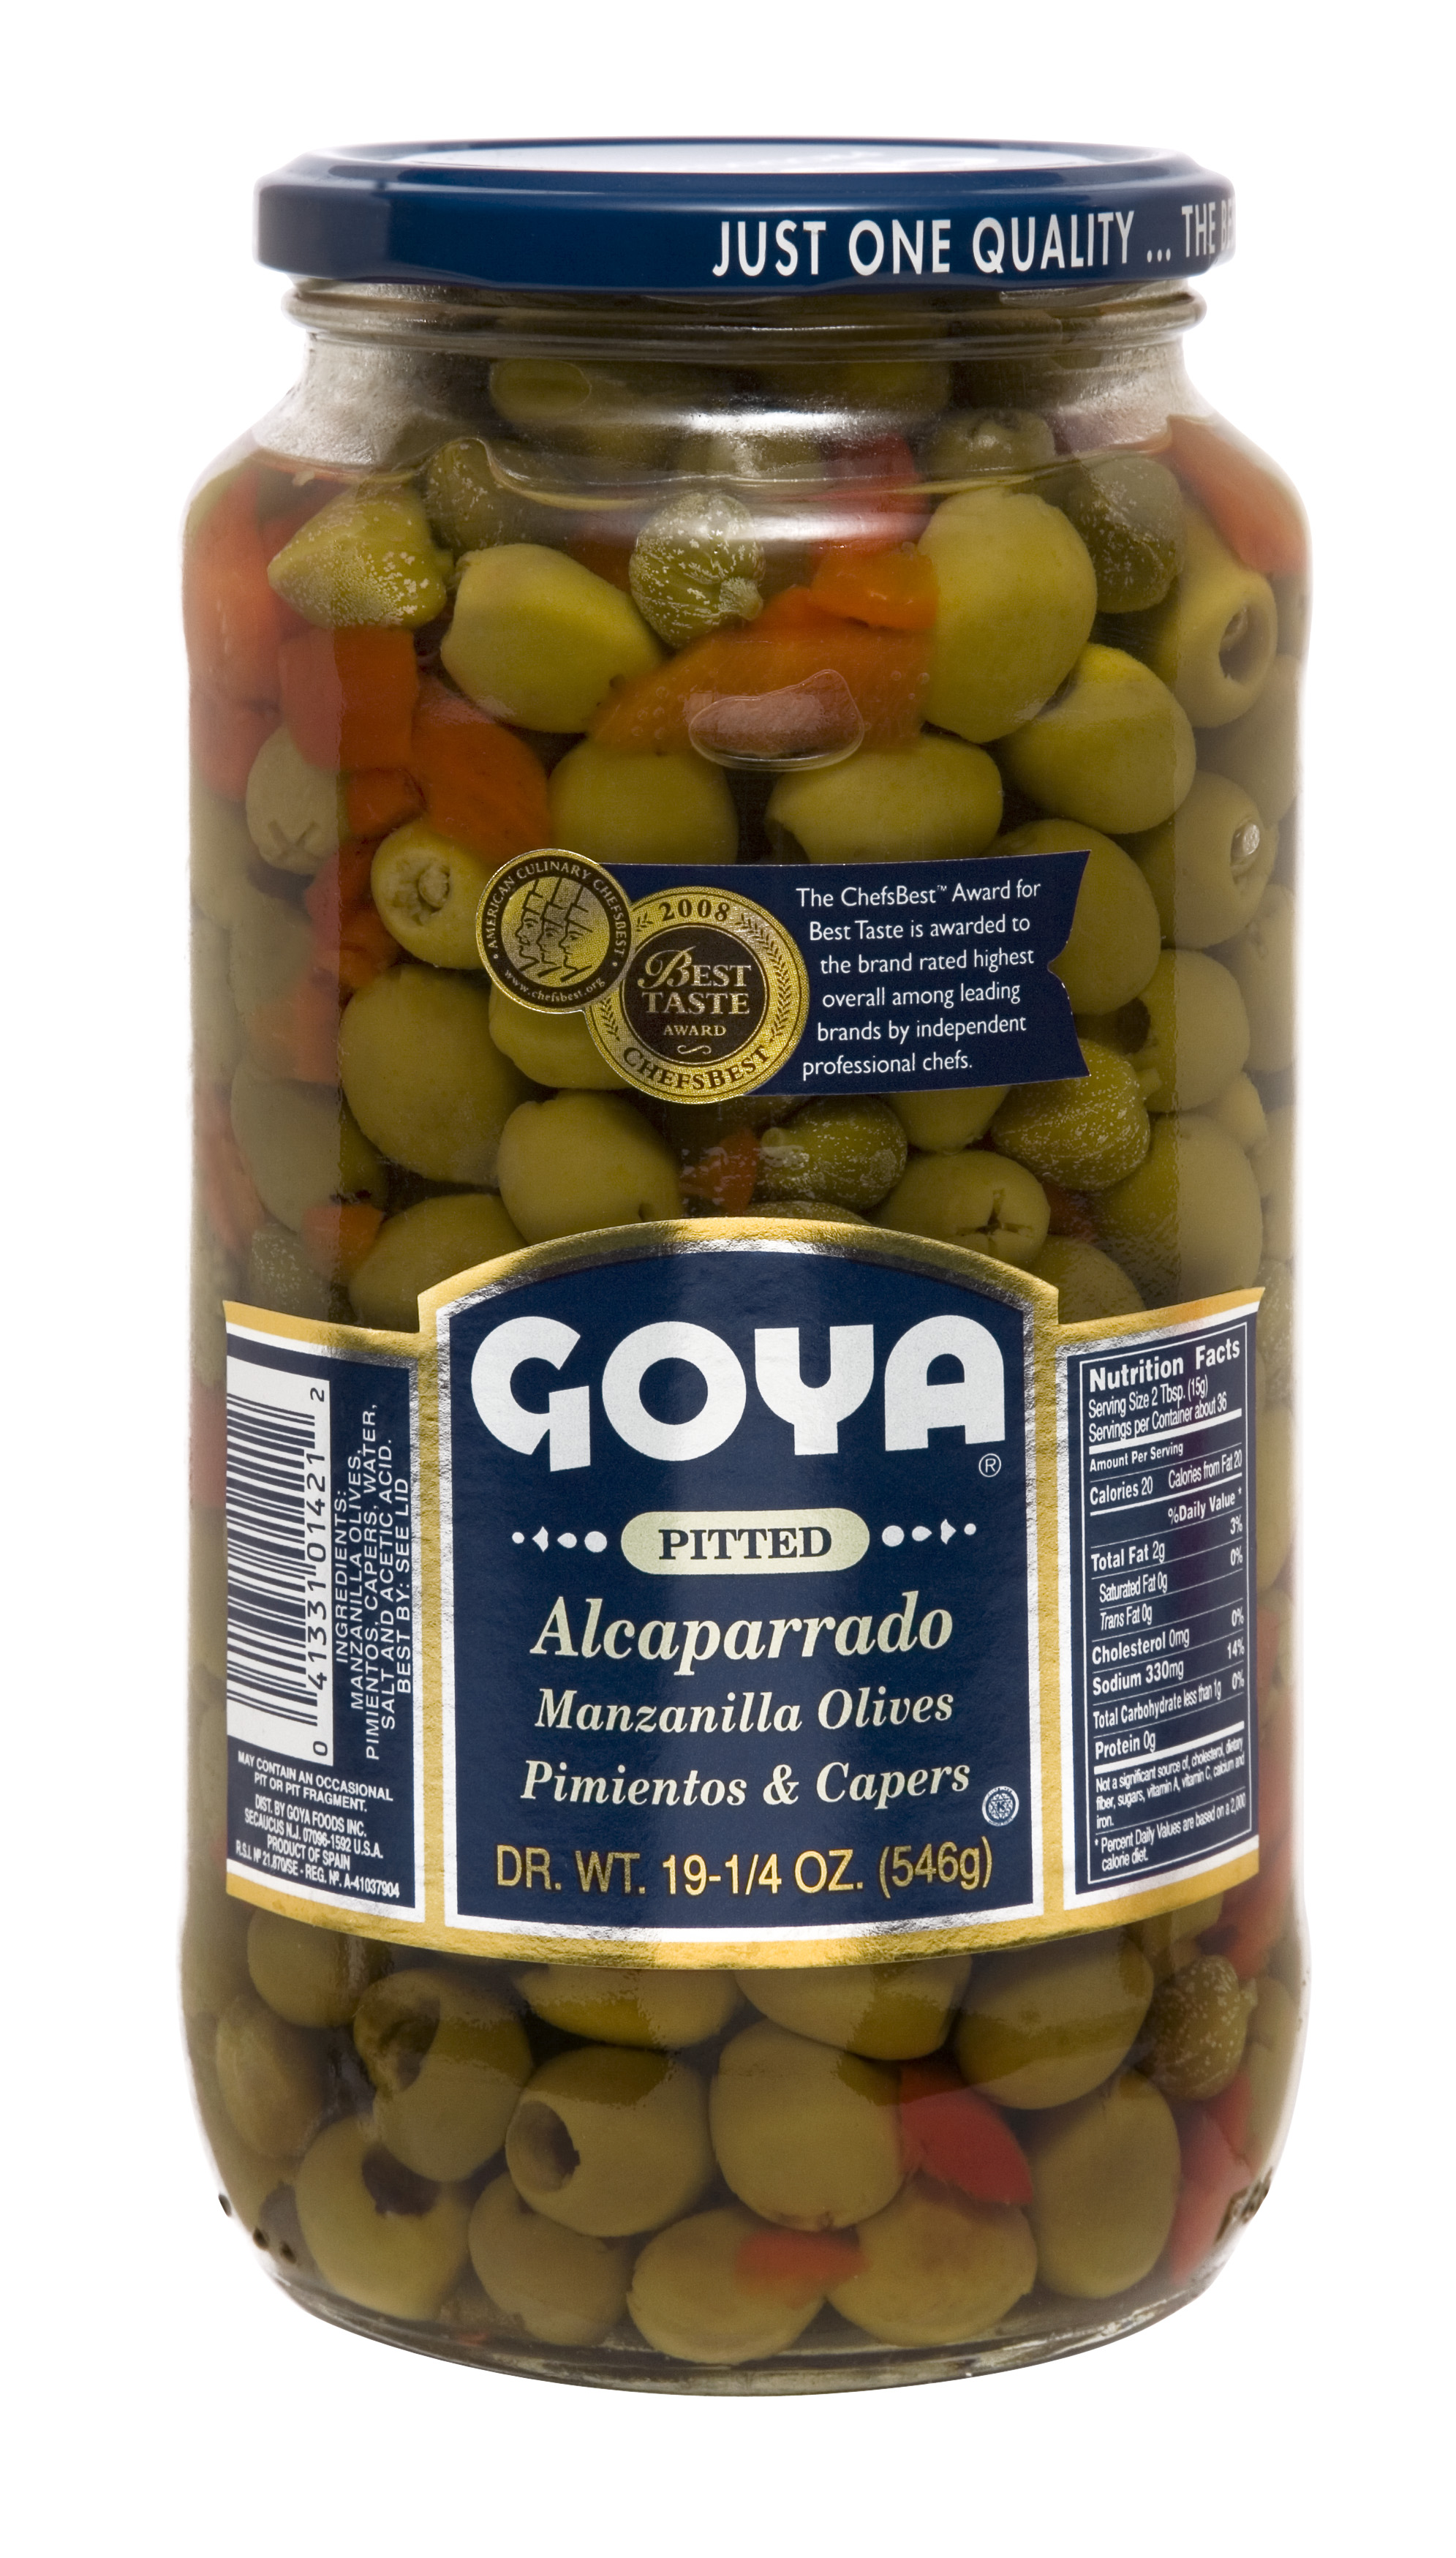 Goya - image 1 of 1